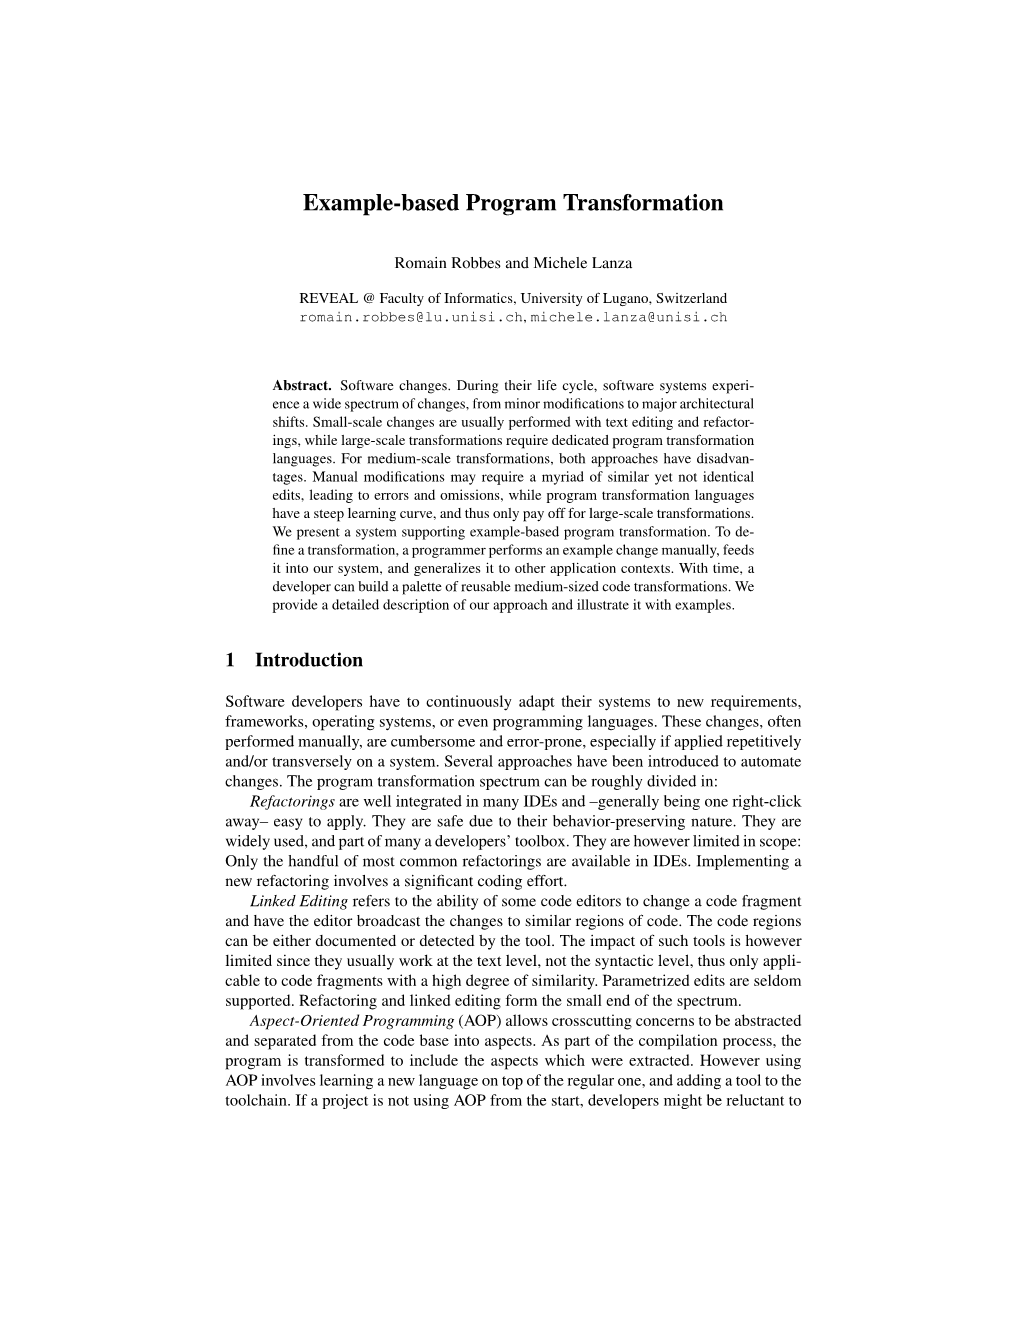 Example-Based Program Transformation